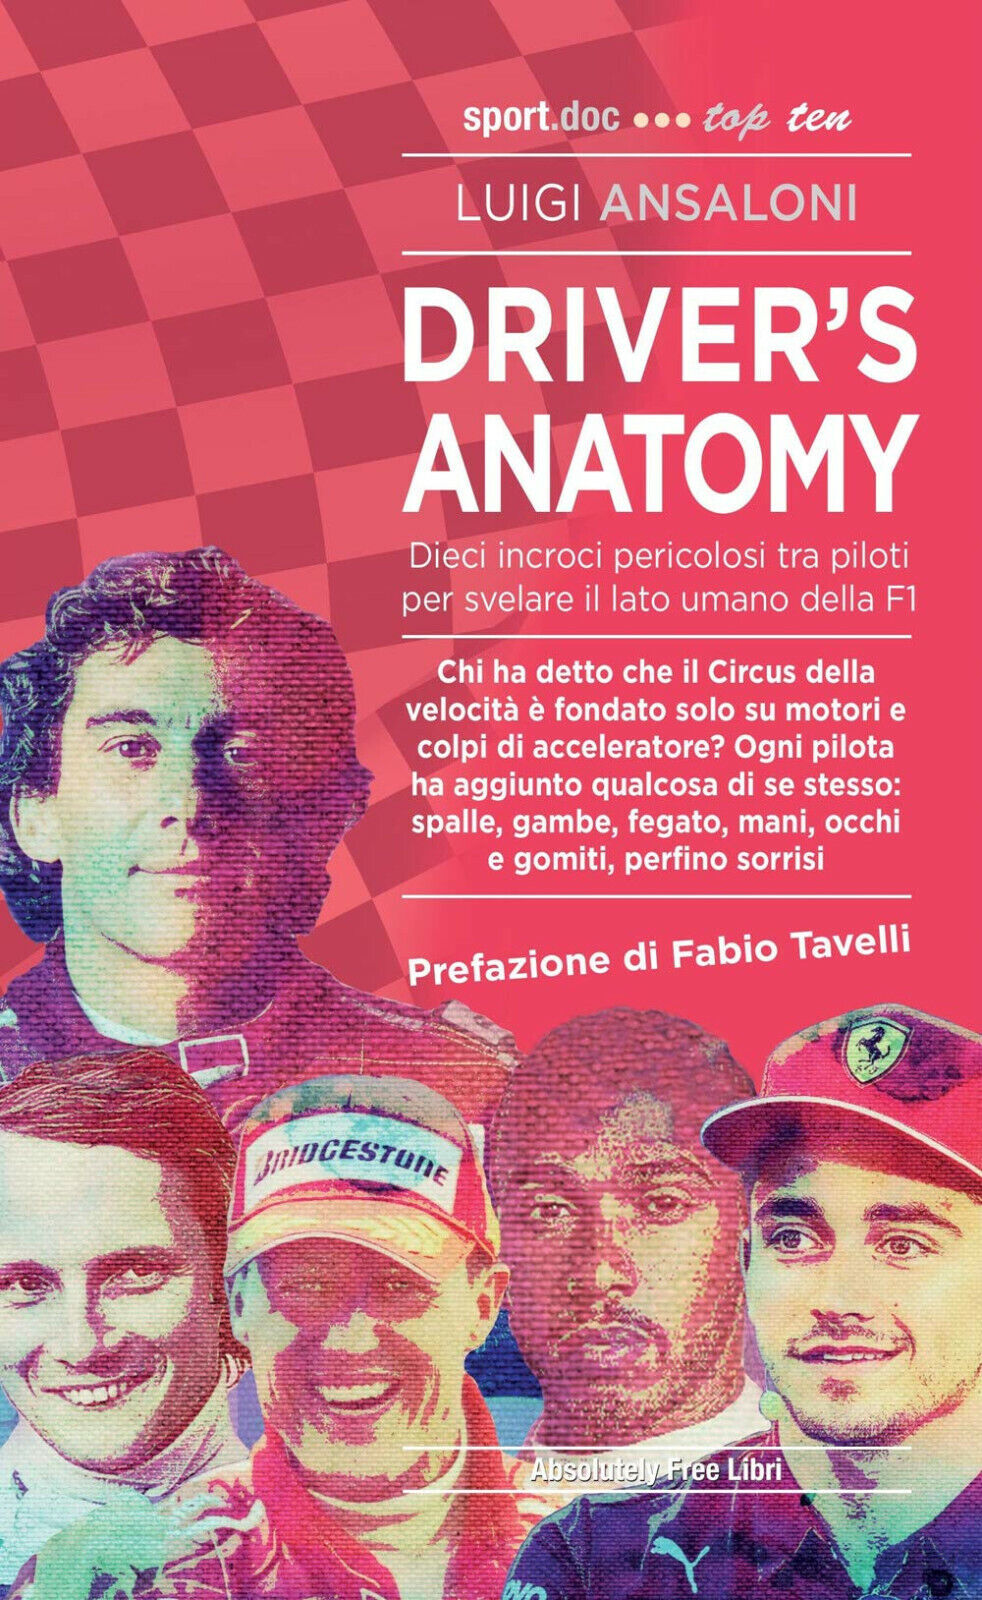 Driver's Anatomy - Luigi Ansaloni - Absolutely Free, 2020